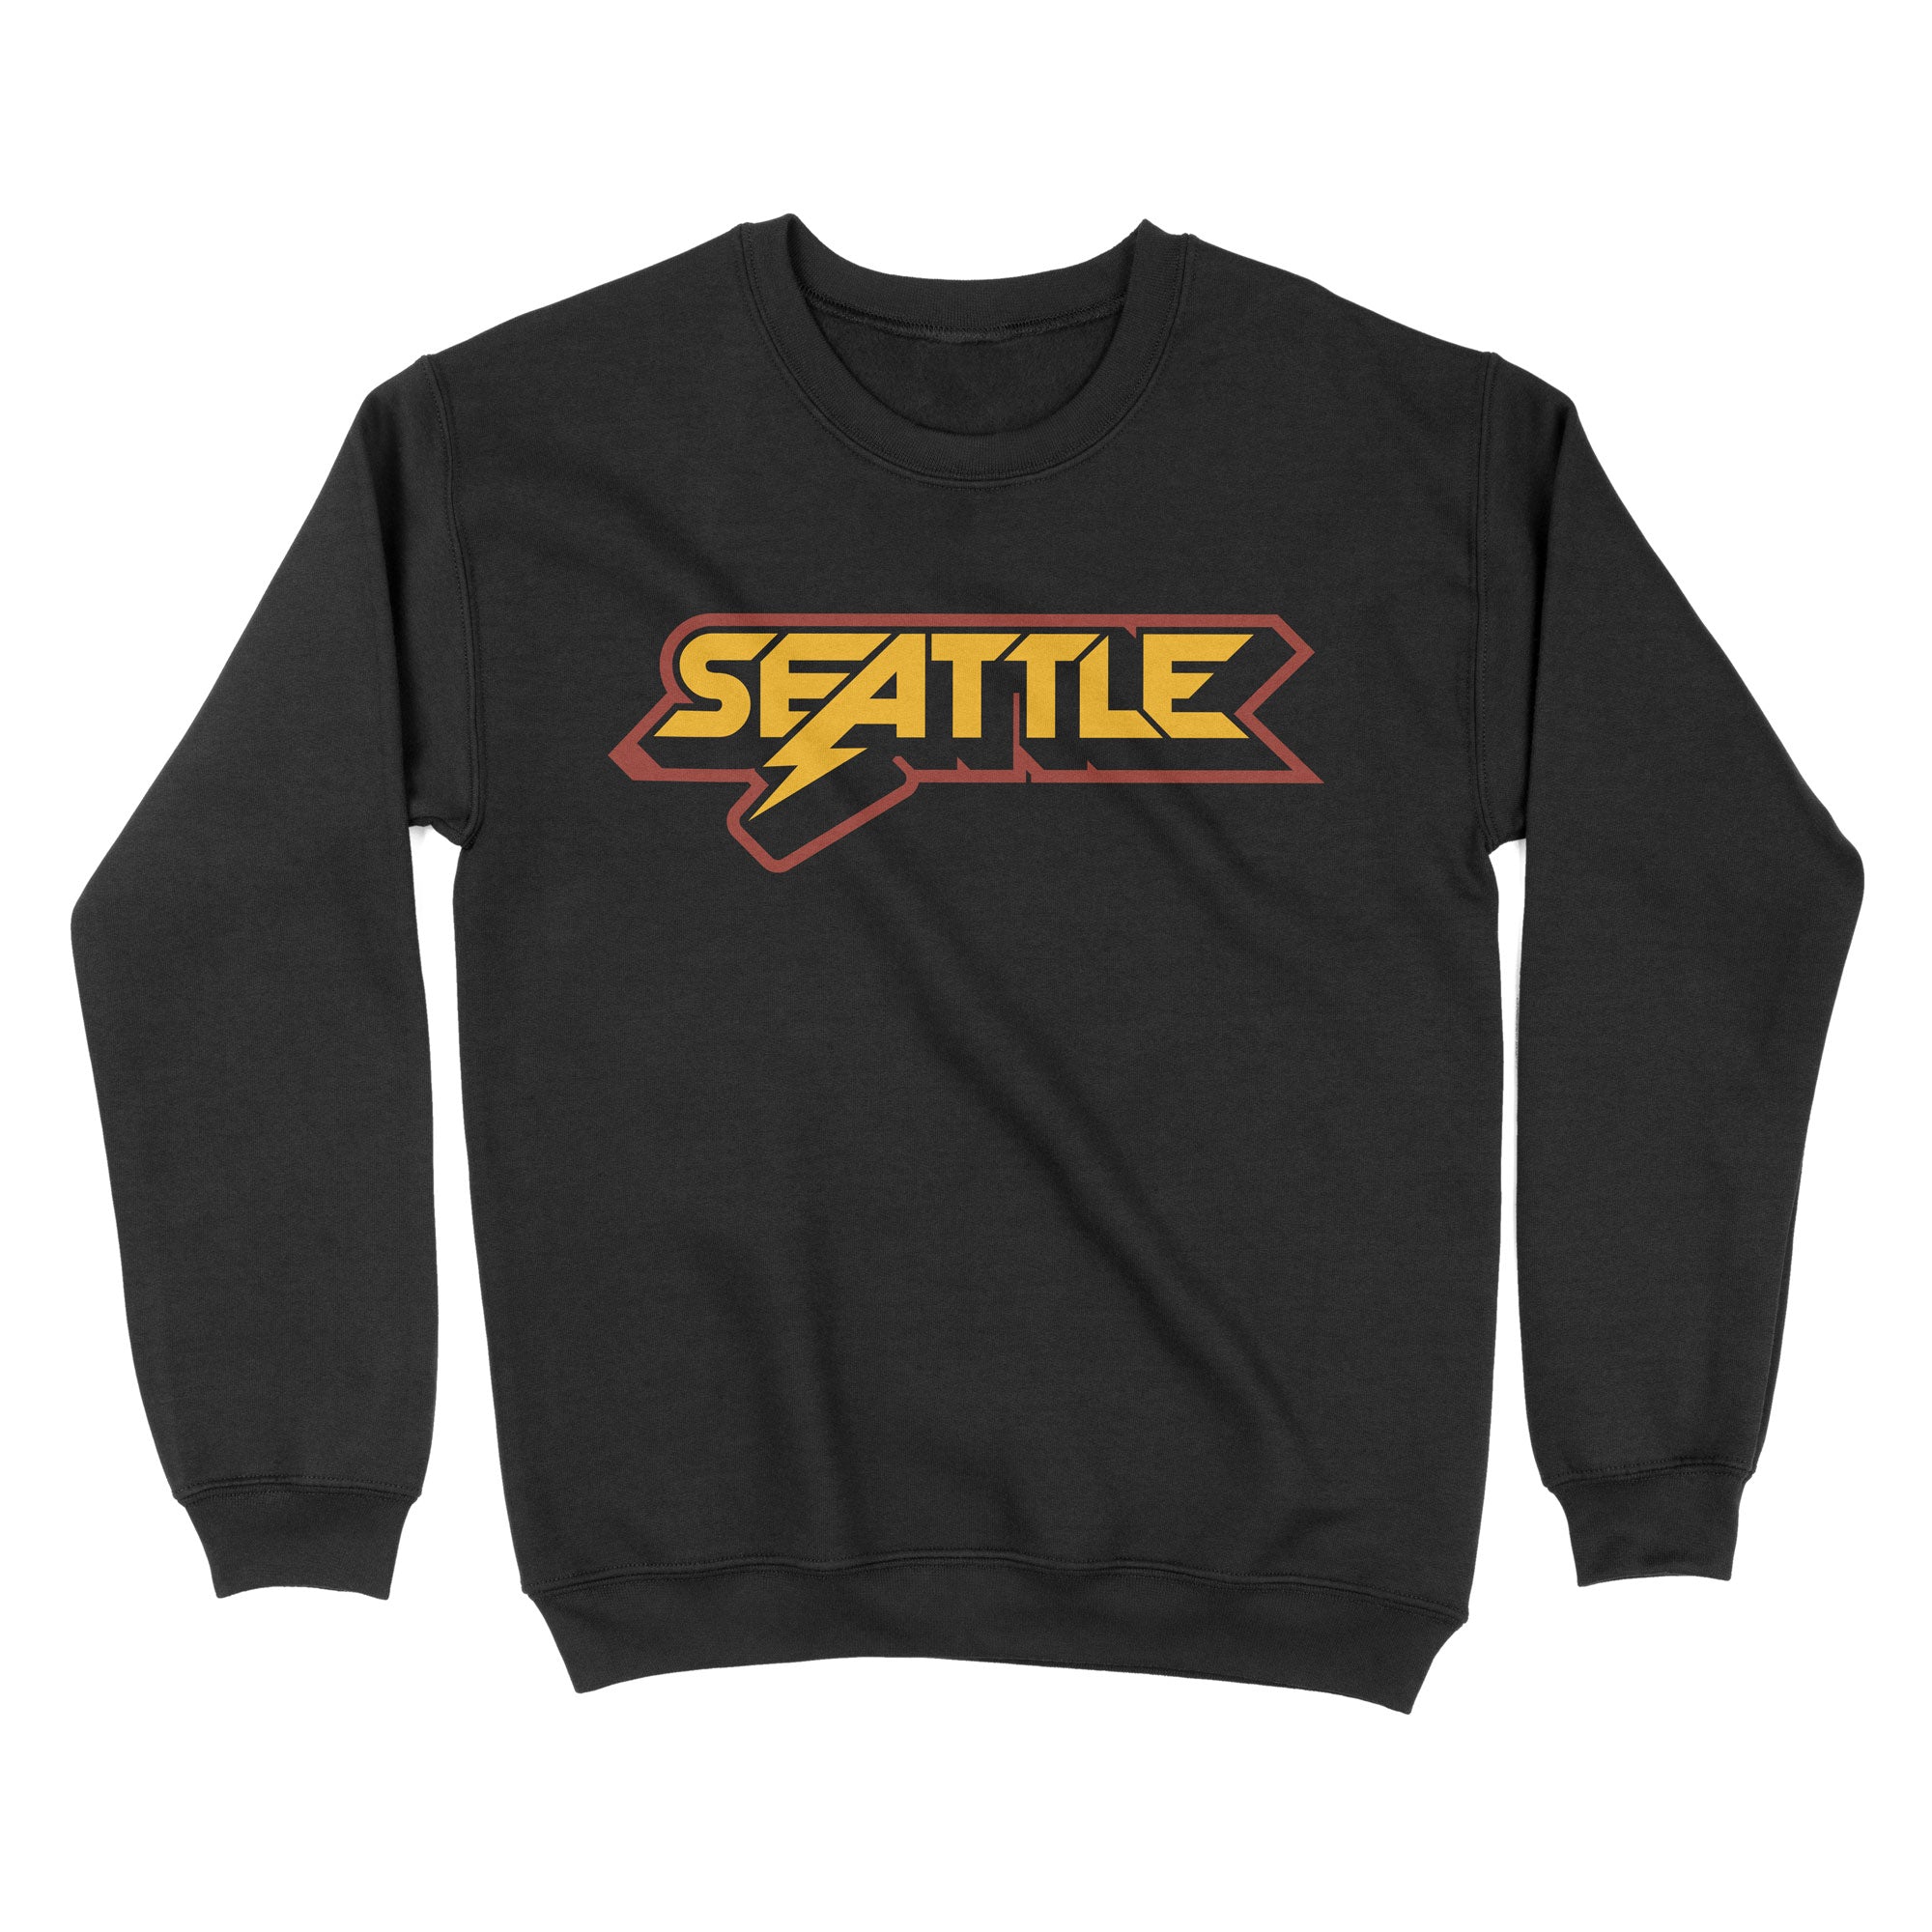 Seattle Metal sweatshirt - Viaduct